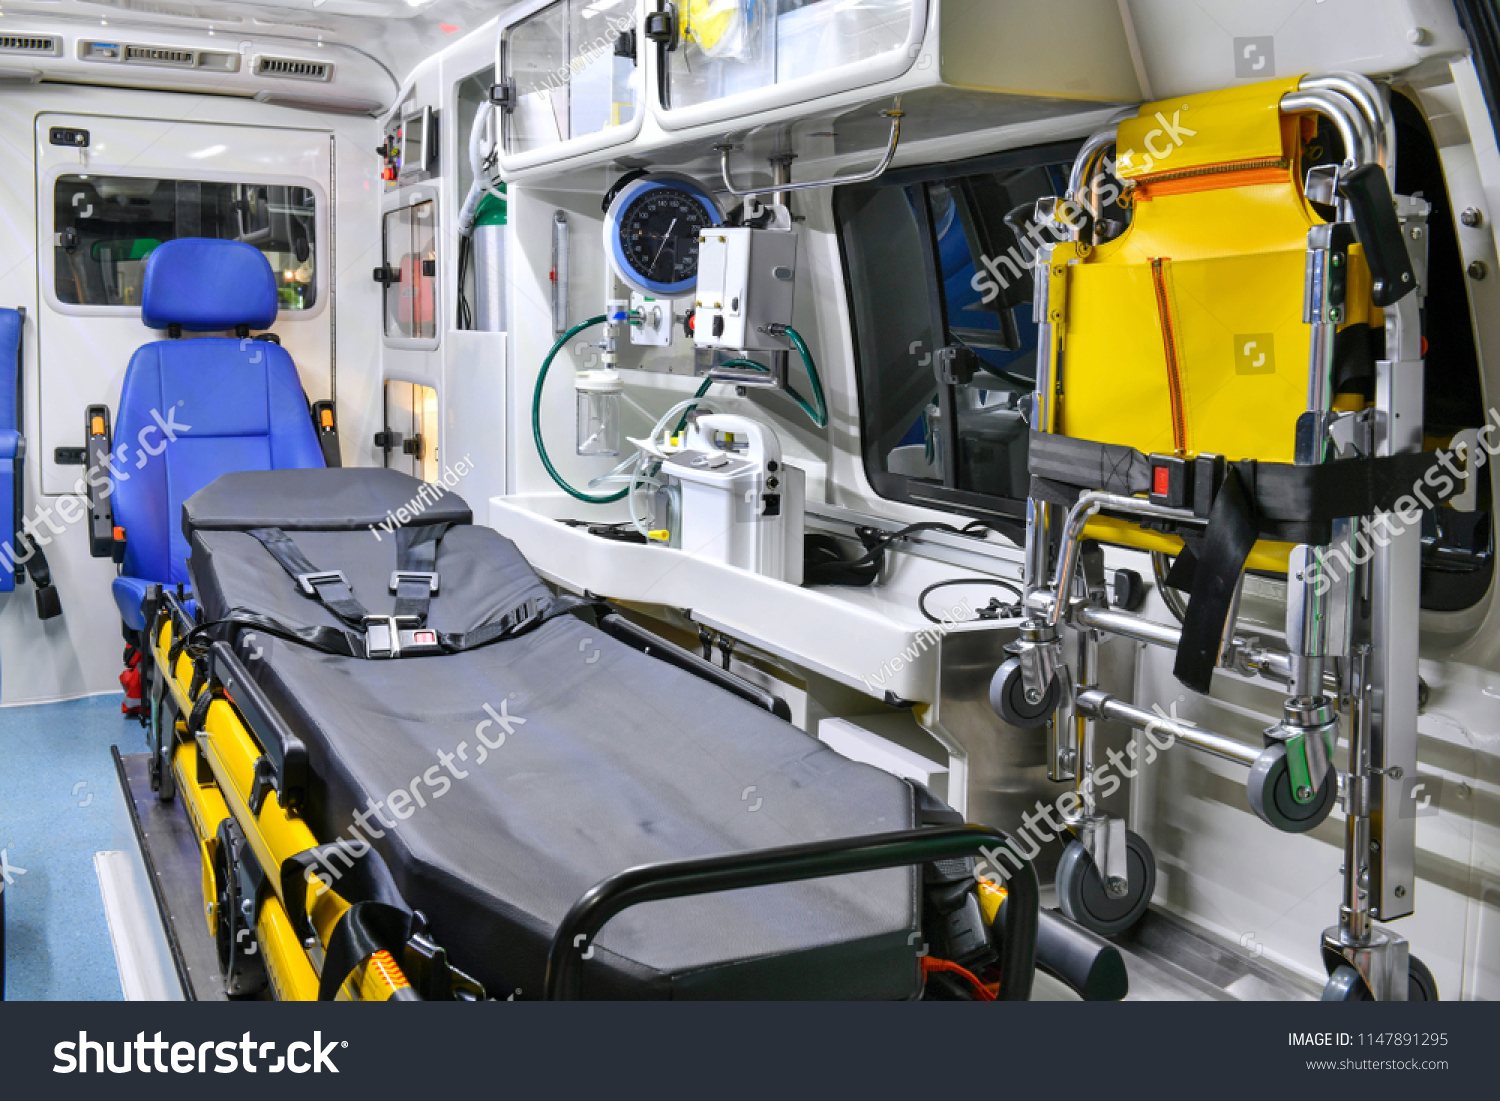 inside-ambulance-images-stock-photos-vectors-shutterstock